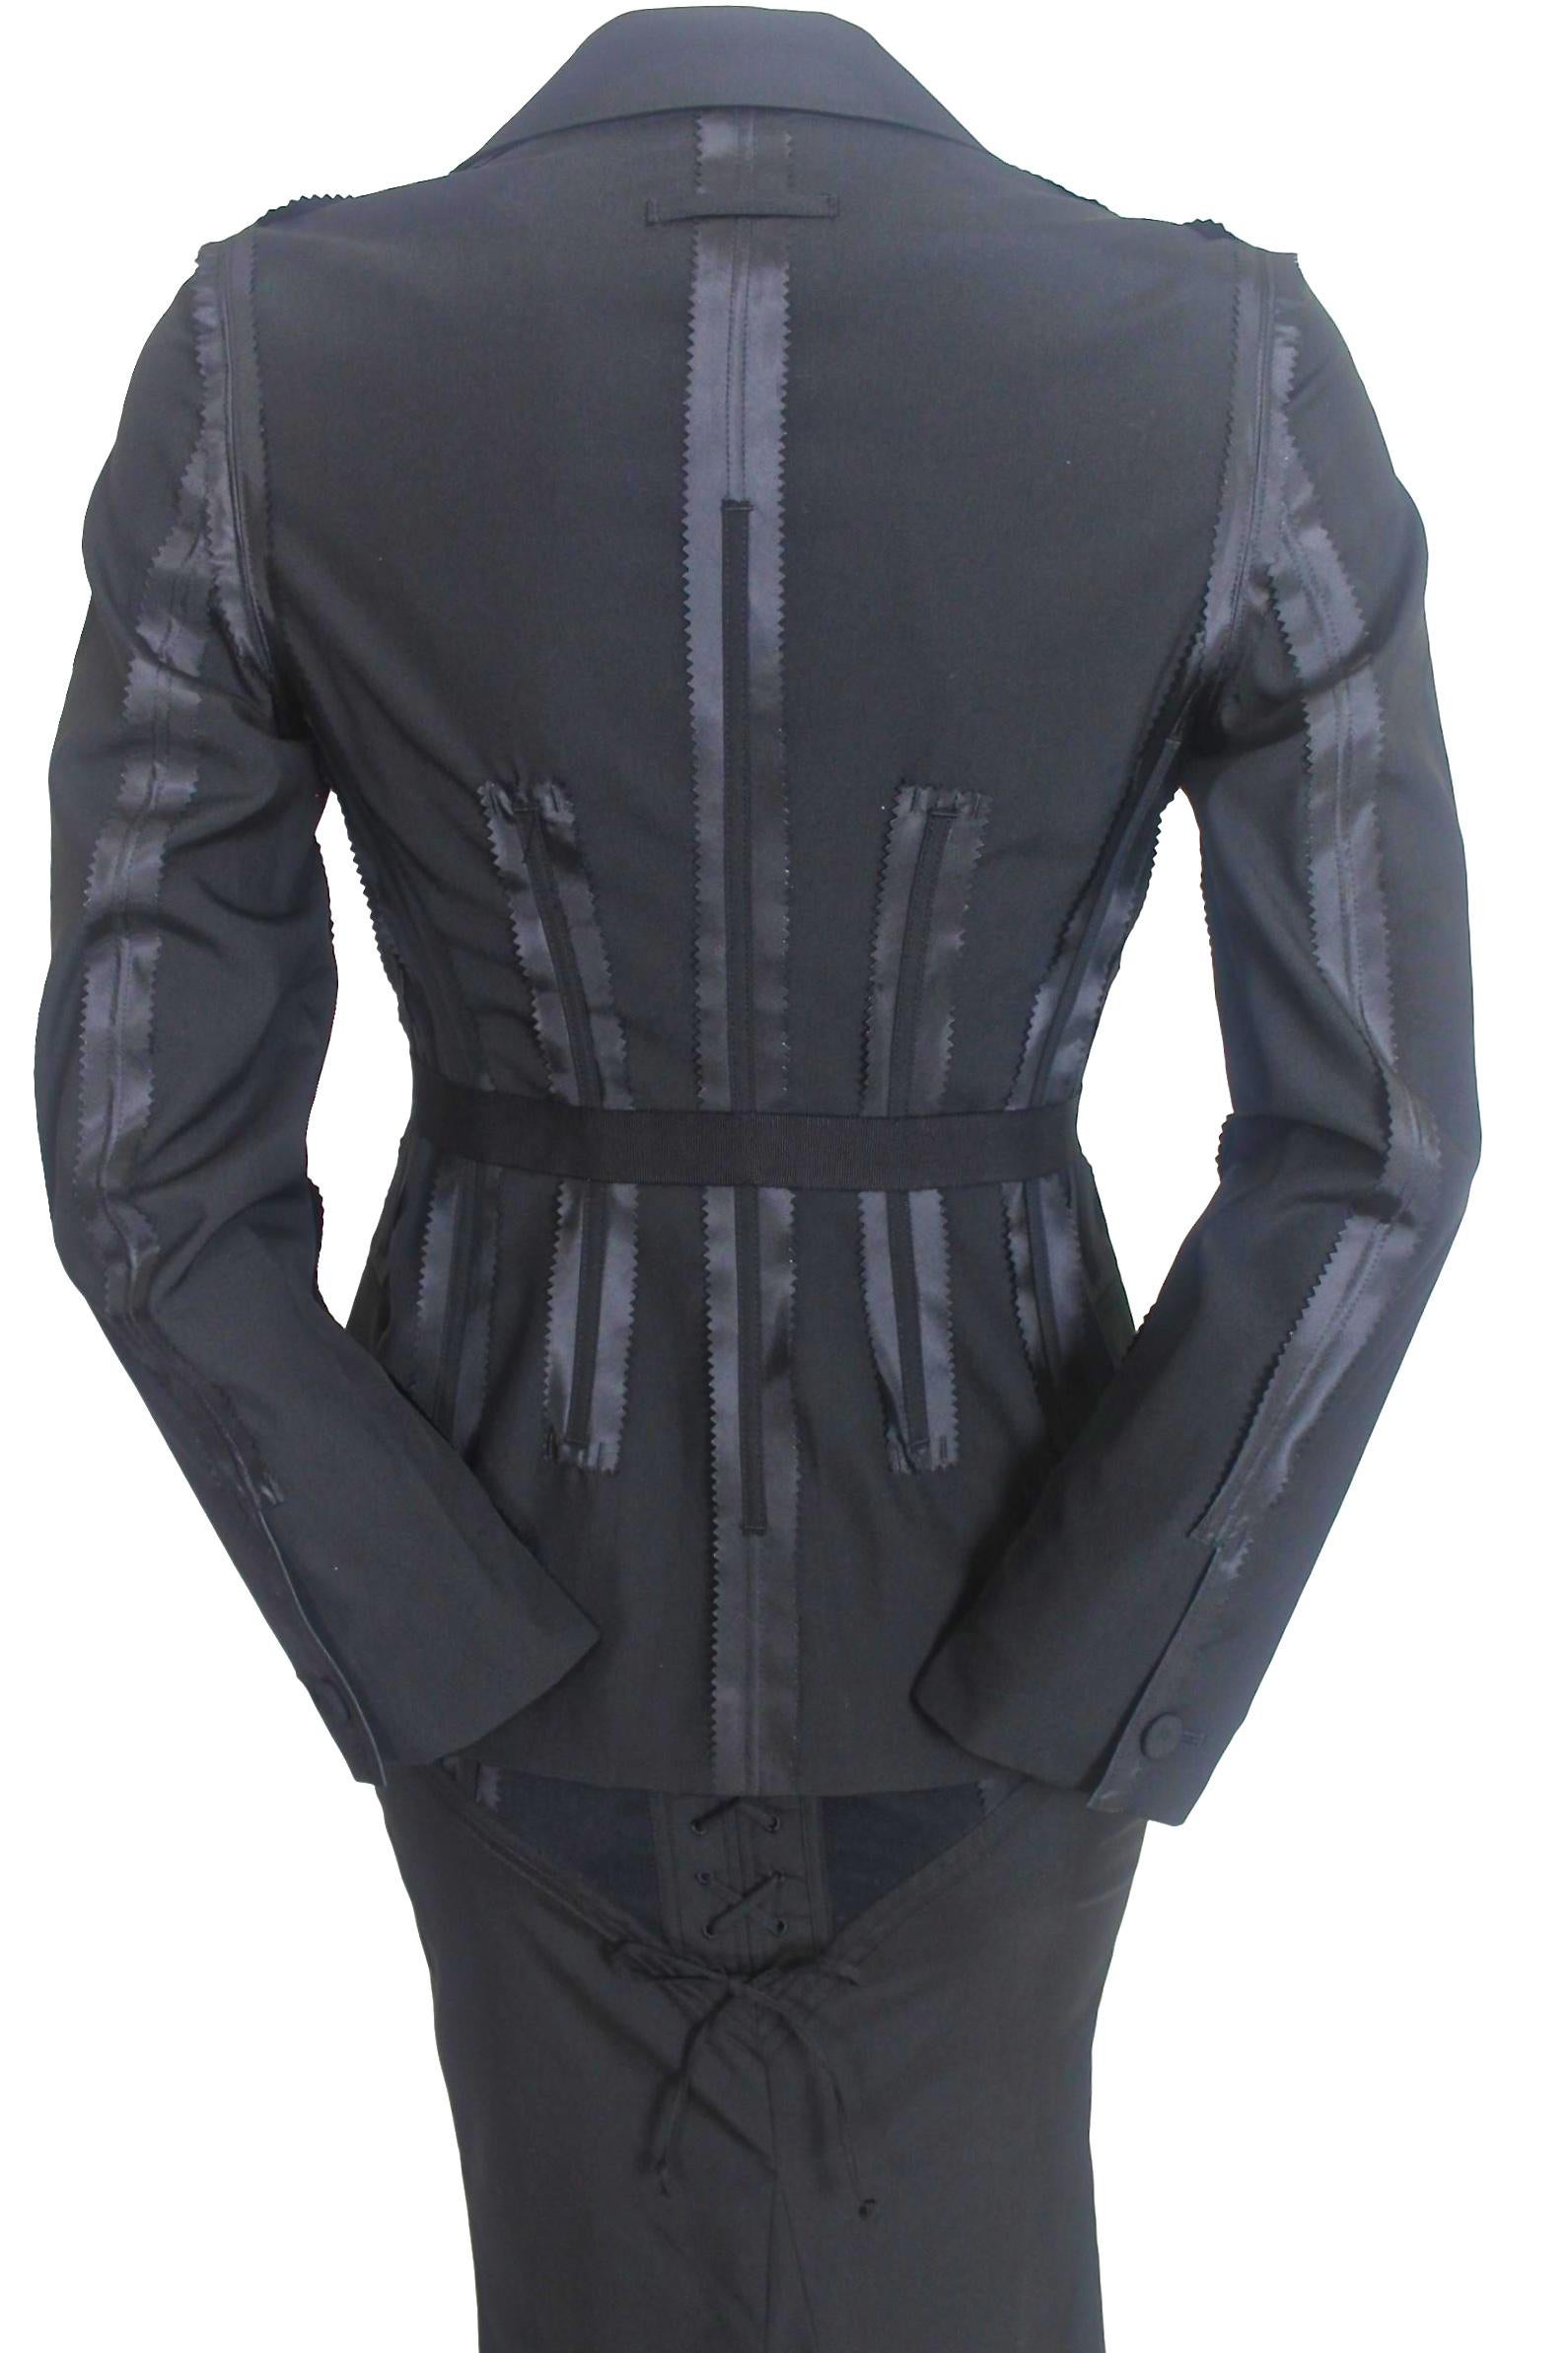 Jean Paul Gaultier 1990s Corset Jacket and Skirt Suit 1